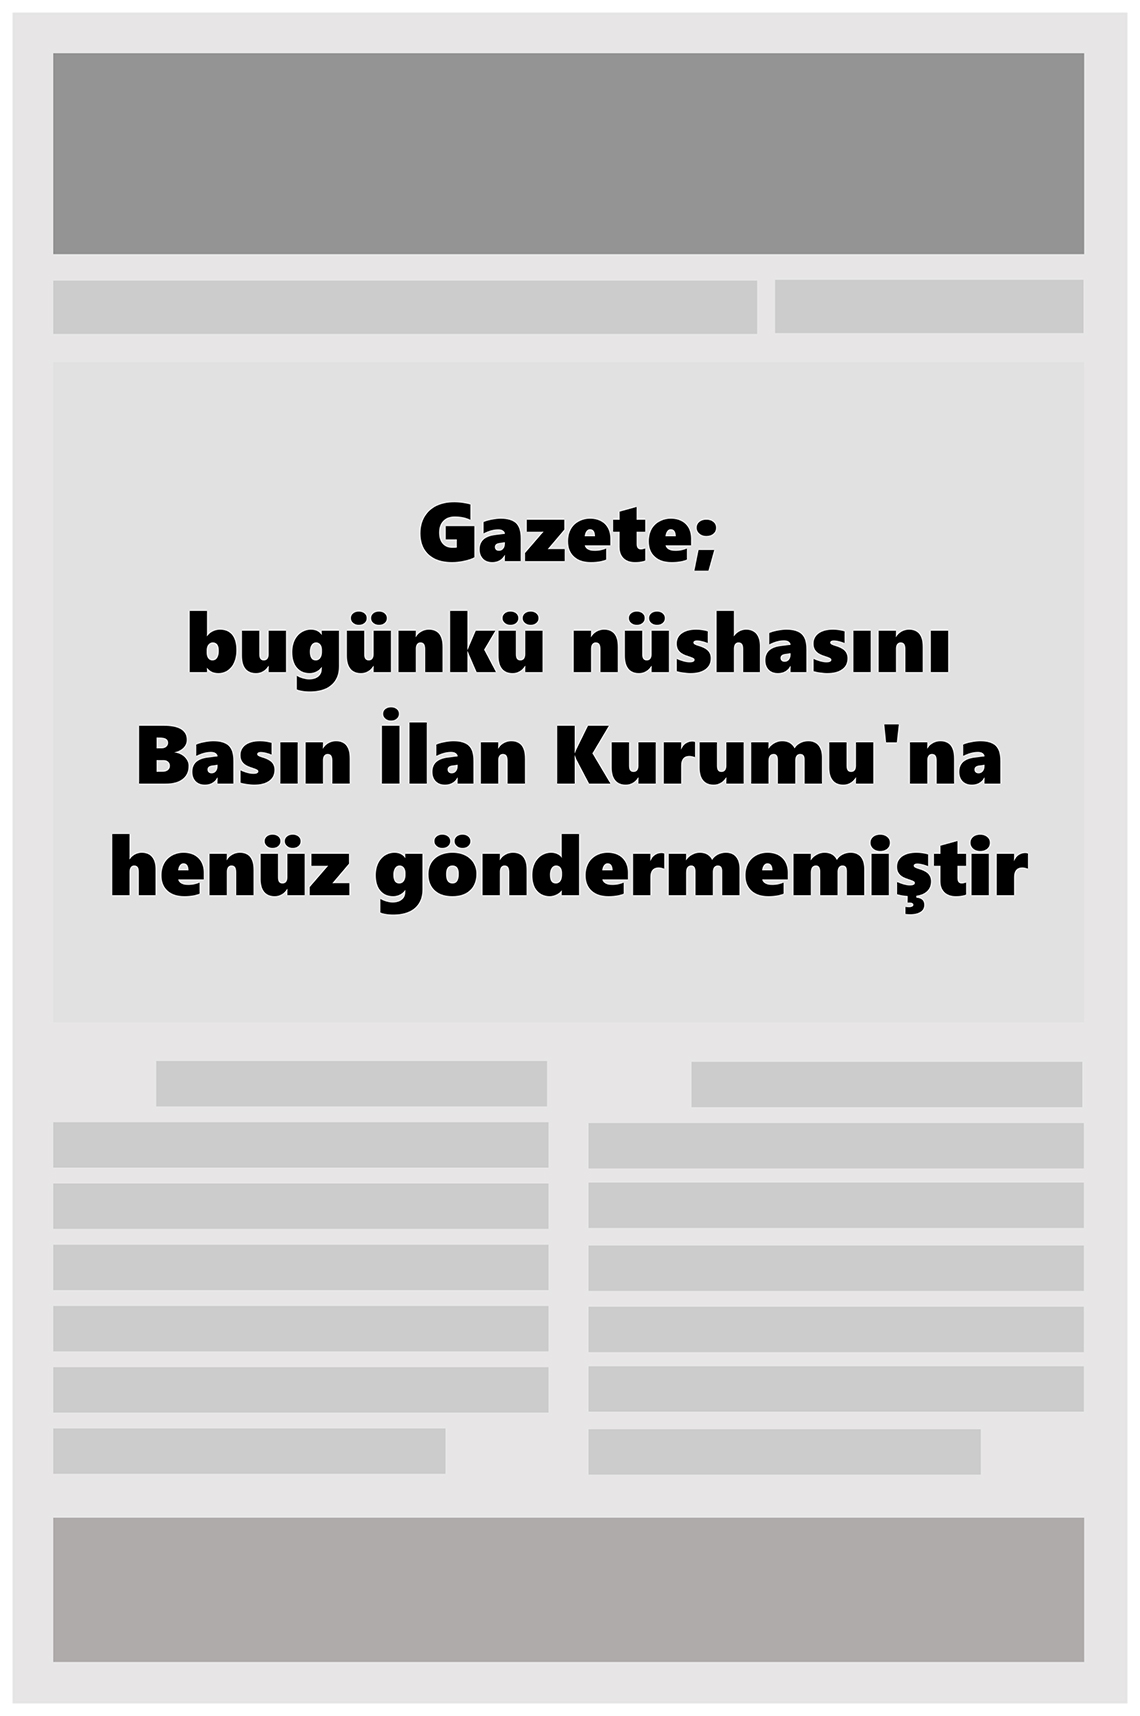 15 Ocak 2022 Gazete 3 Gazete Manşeti